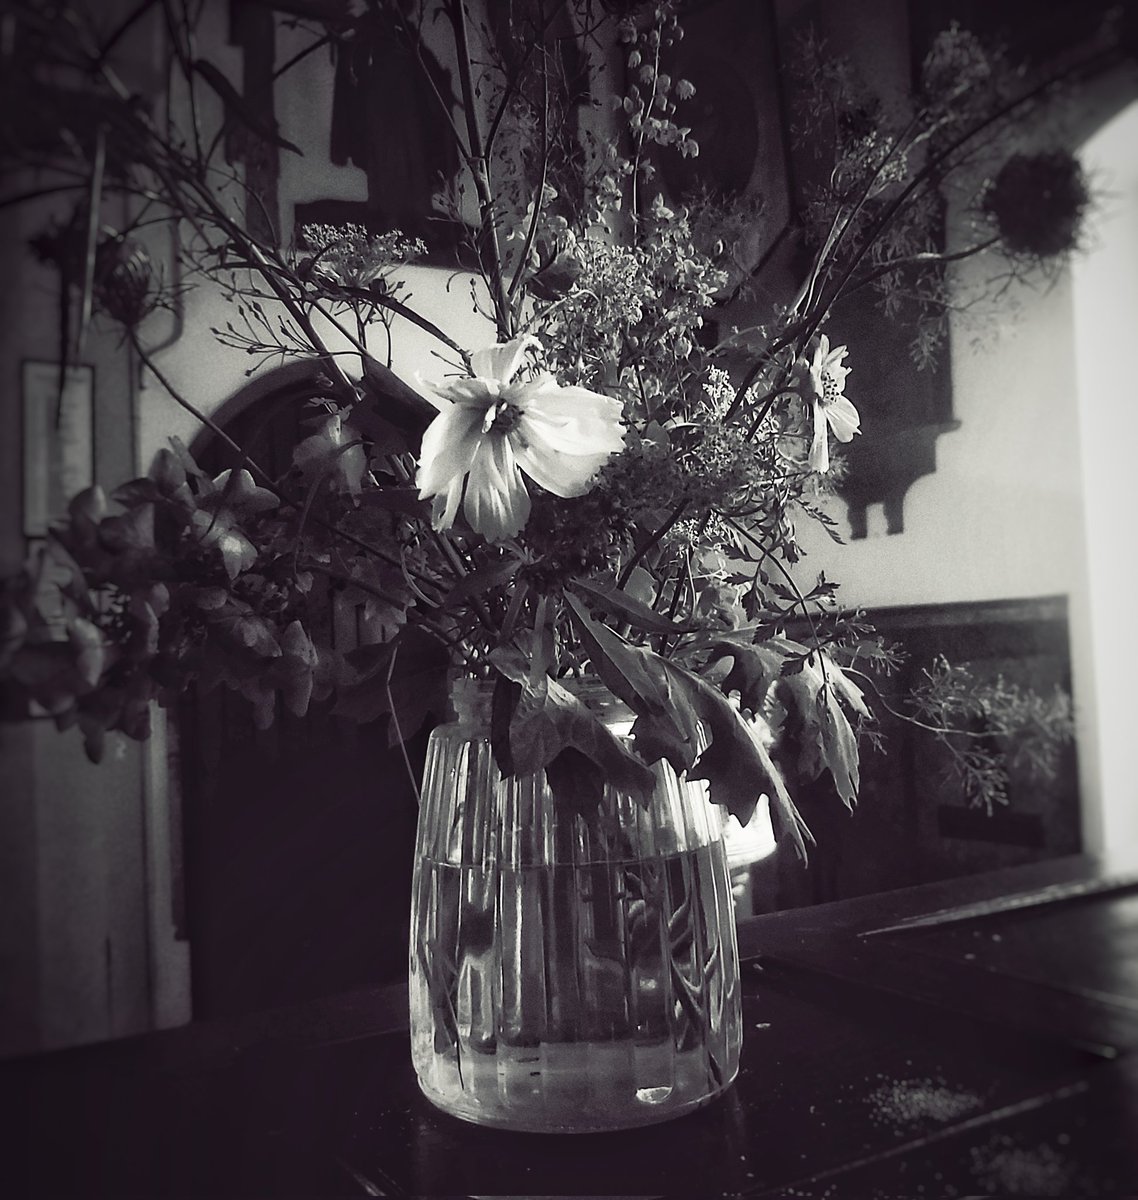 ©️ Roy Clark 2023
#cutflowers #floral #stilllife